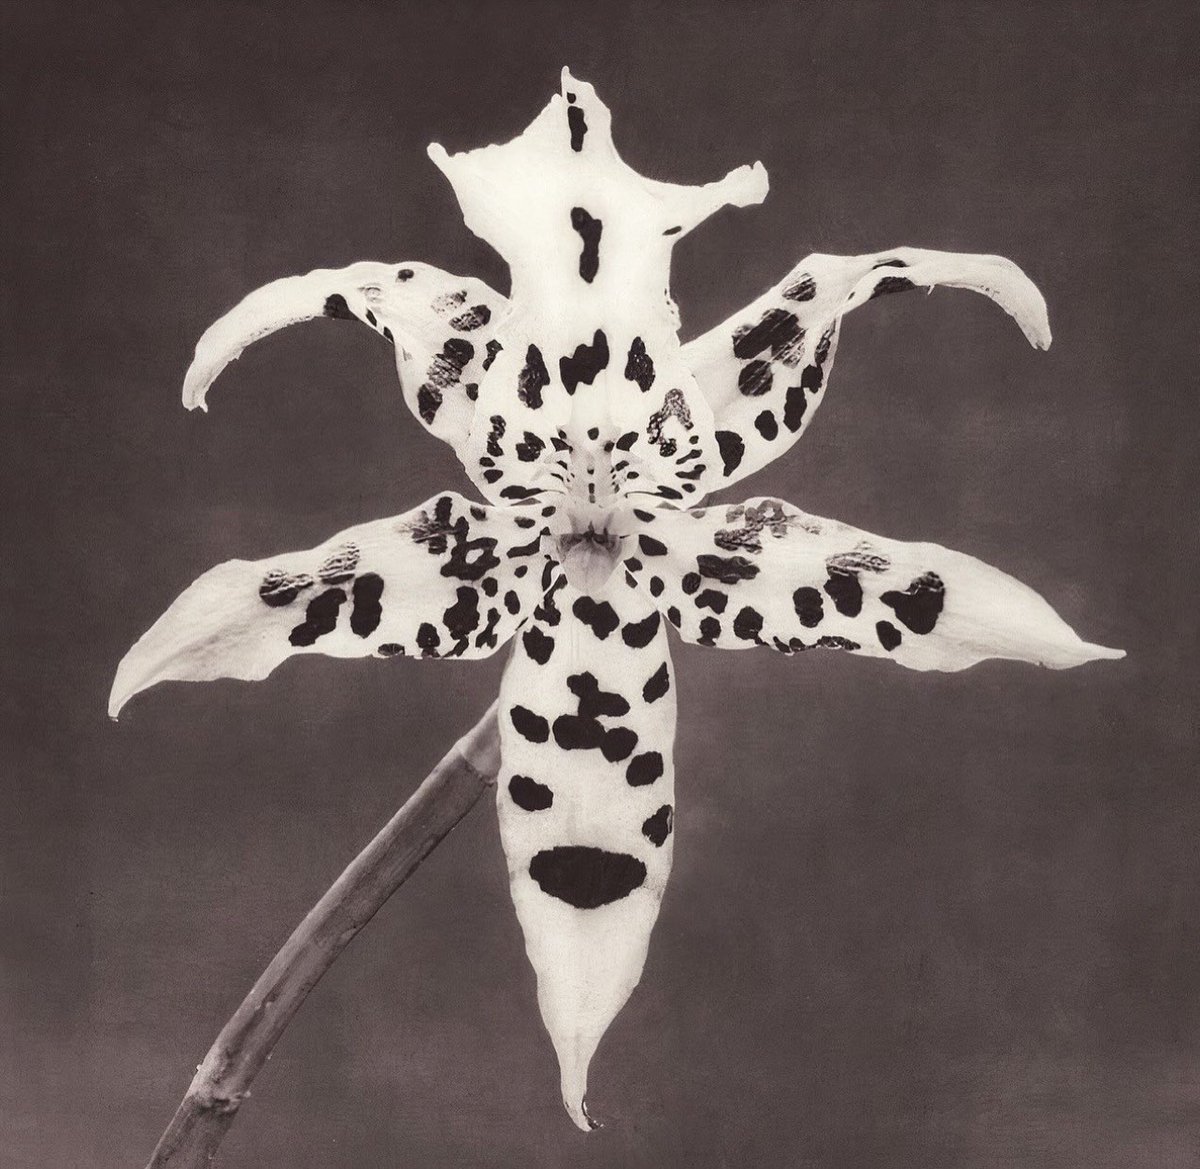 Orchid Robert Mapplethorpe.